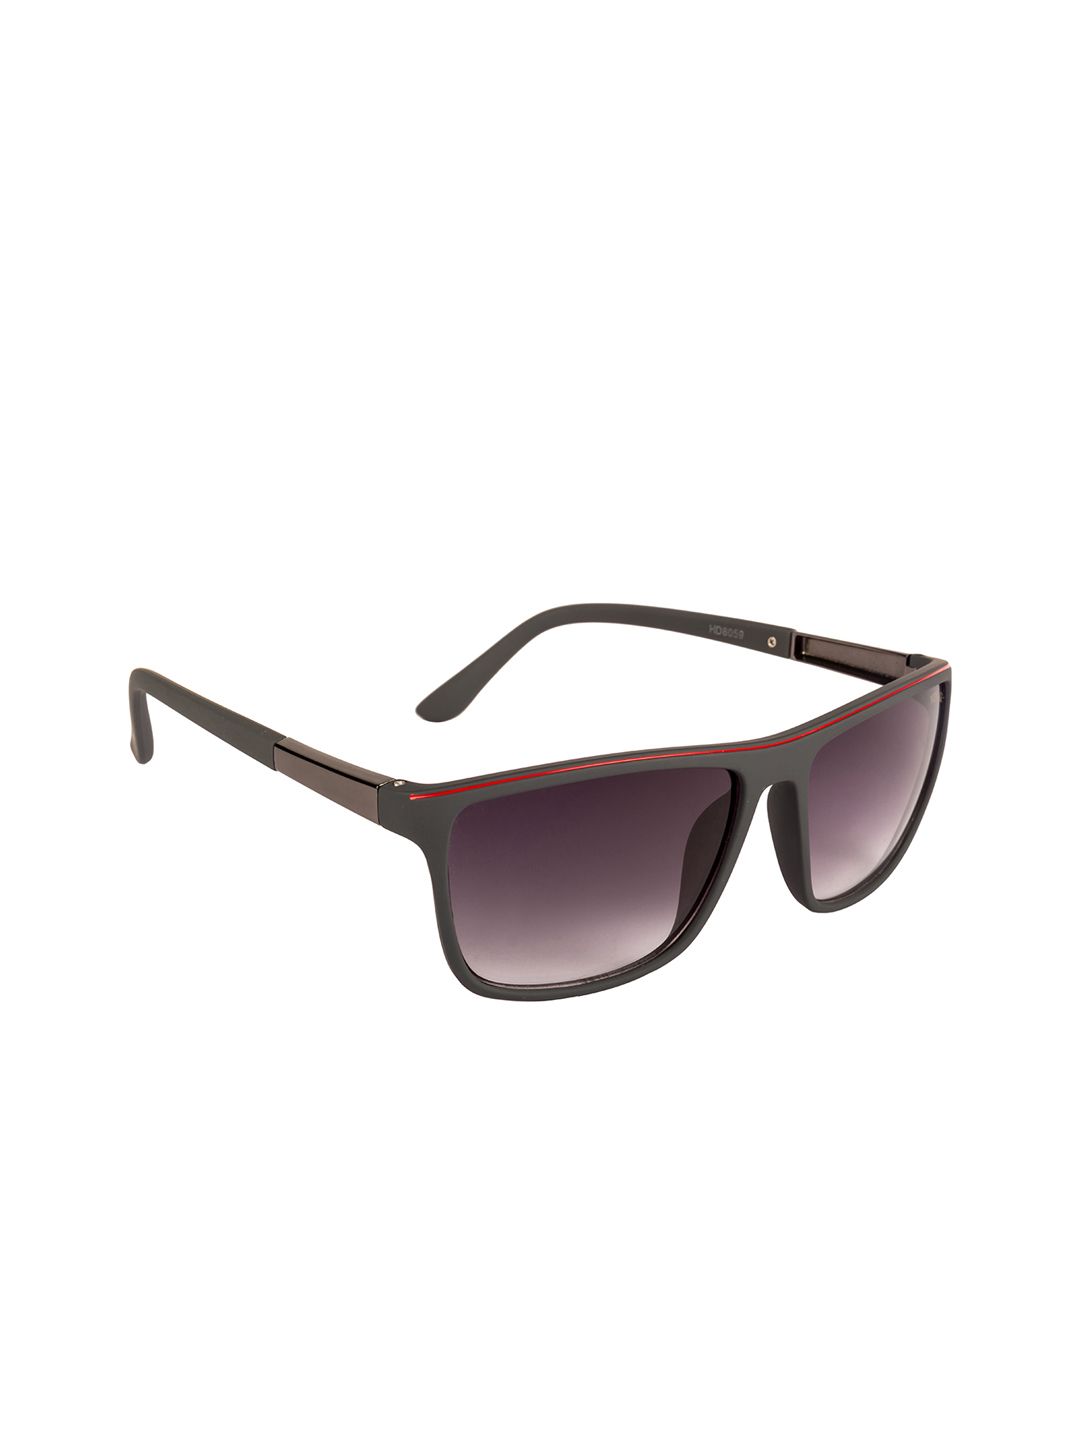 Voyage Unisex Wayfarer UV Protected Sunglasses HD8059MG3320 Price in India